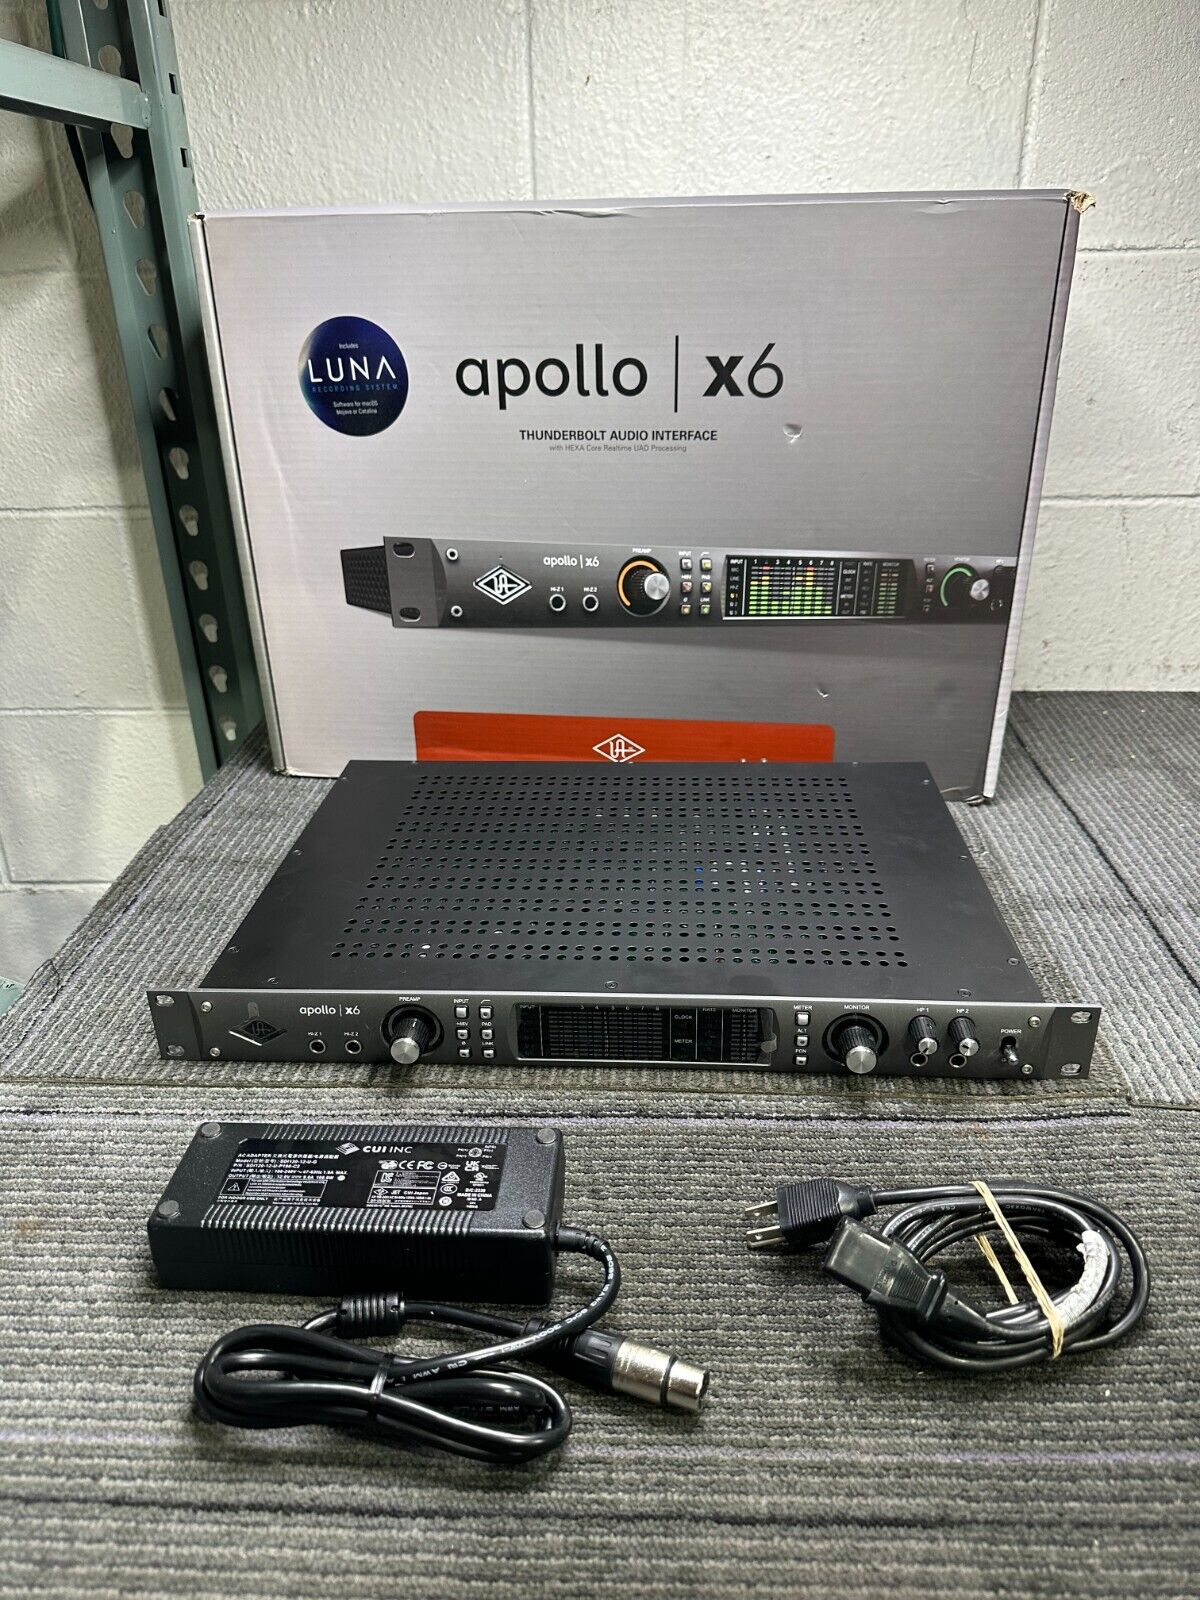 Universal Audio Apollo x6 Heritage Edition 16 x 22 Thunderbolt 3 Audio Interface